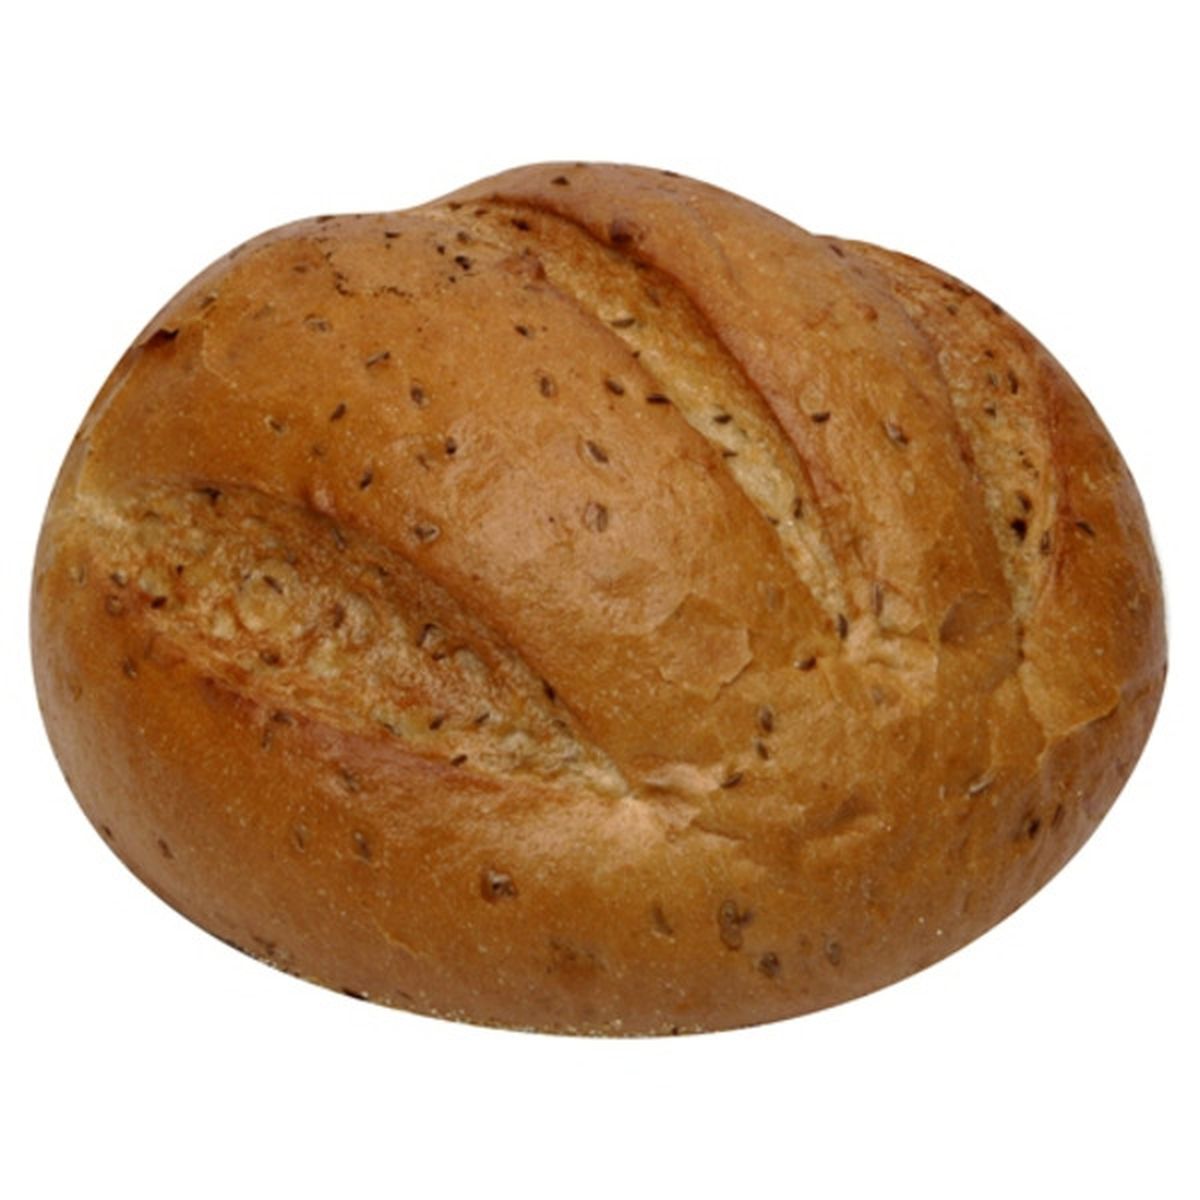 Calories in Wegmans Round Caraway Rye Bread